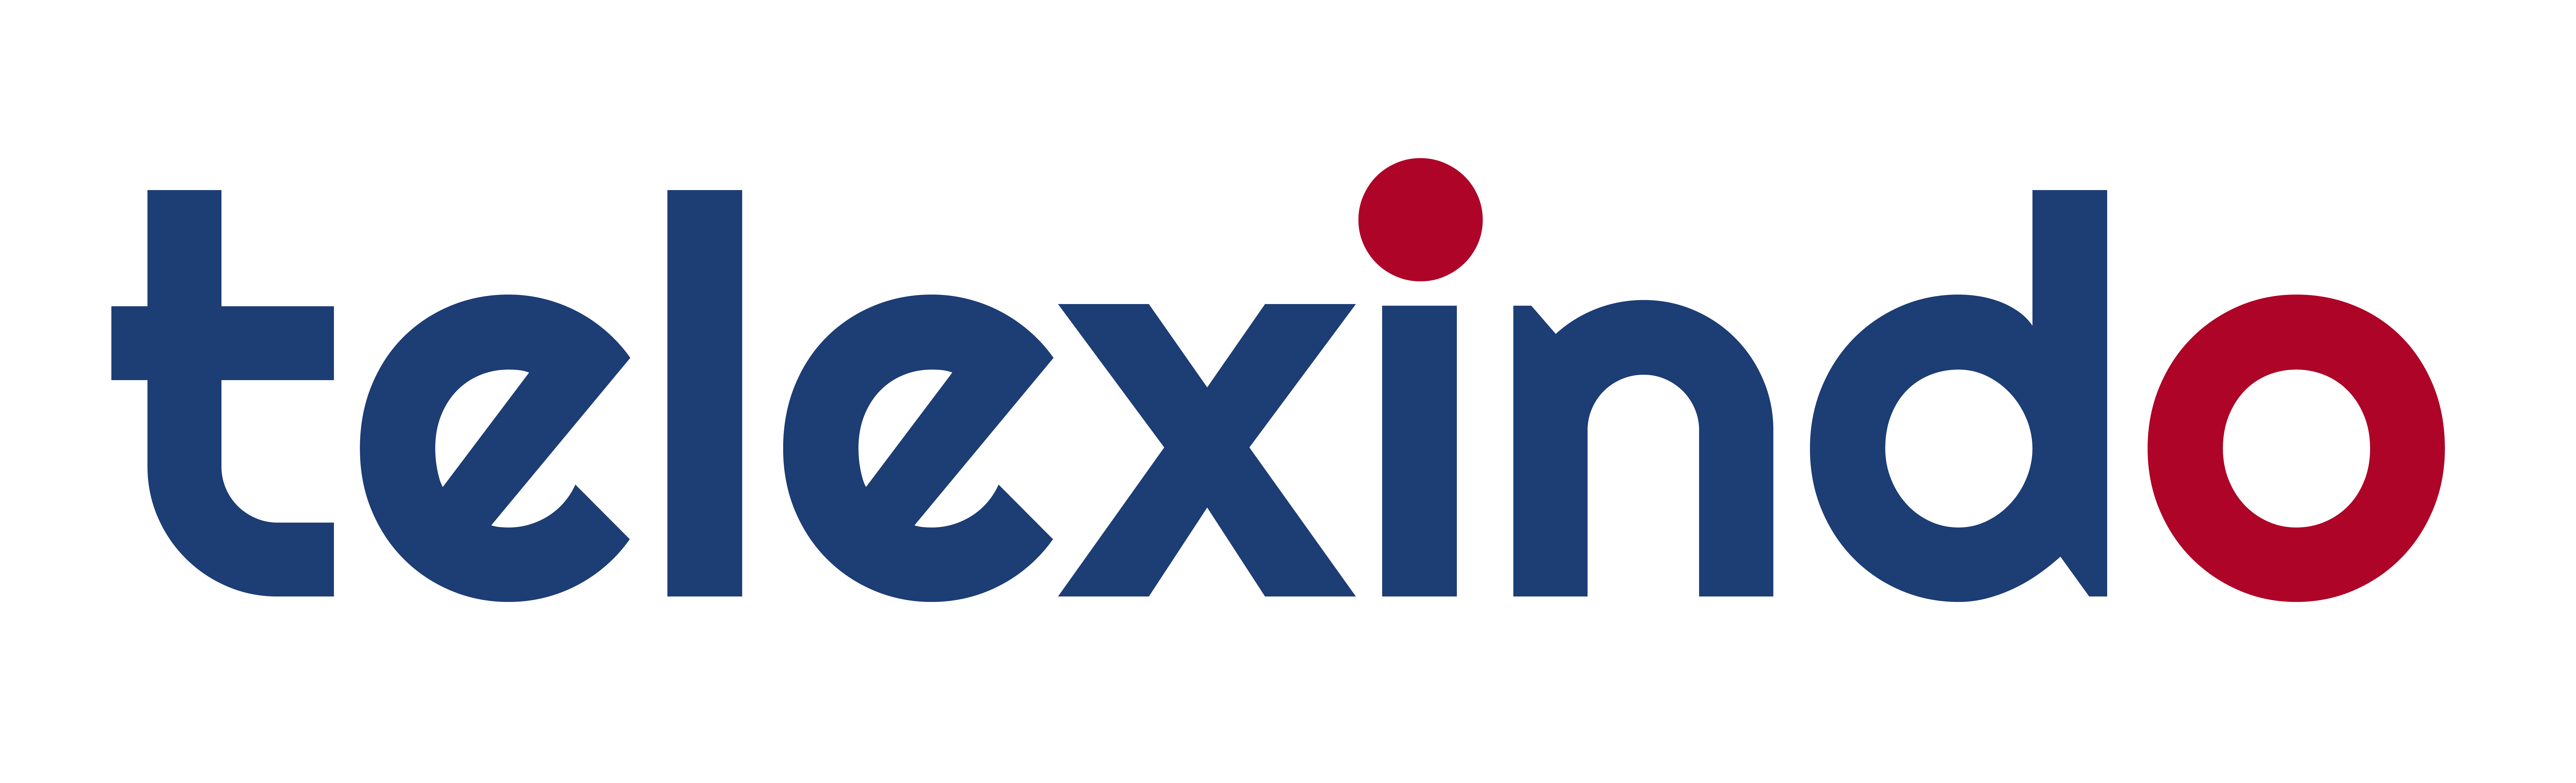 Telexindo-logo